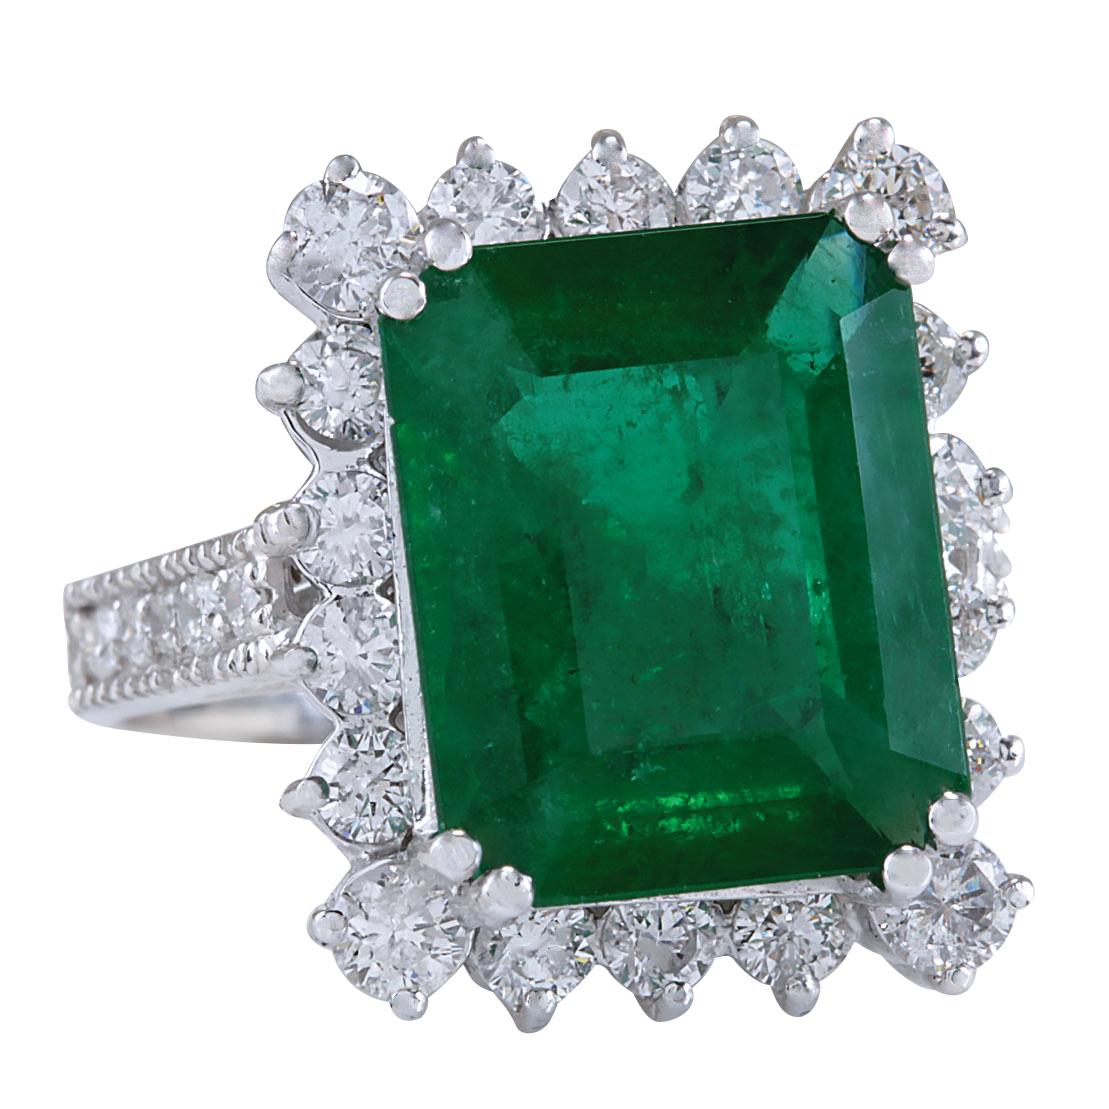 6.94 Carat Emerald 14 Karat White Gold Diamond Ring
Stamped: 14K White Gold
Total Ring Weight: 8.3 Grams
Total Natural Emerald Weight is 5.44 Carat (Measures: 14.00x10.00 mm)
Color: Green
Total Natural Diamond Weight is 1.50 Carat
Color: F-G,